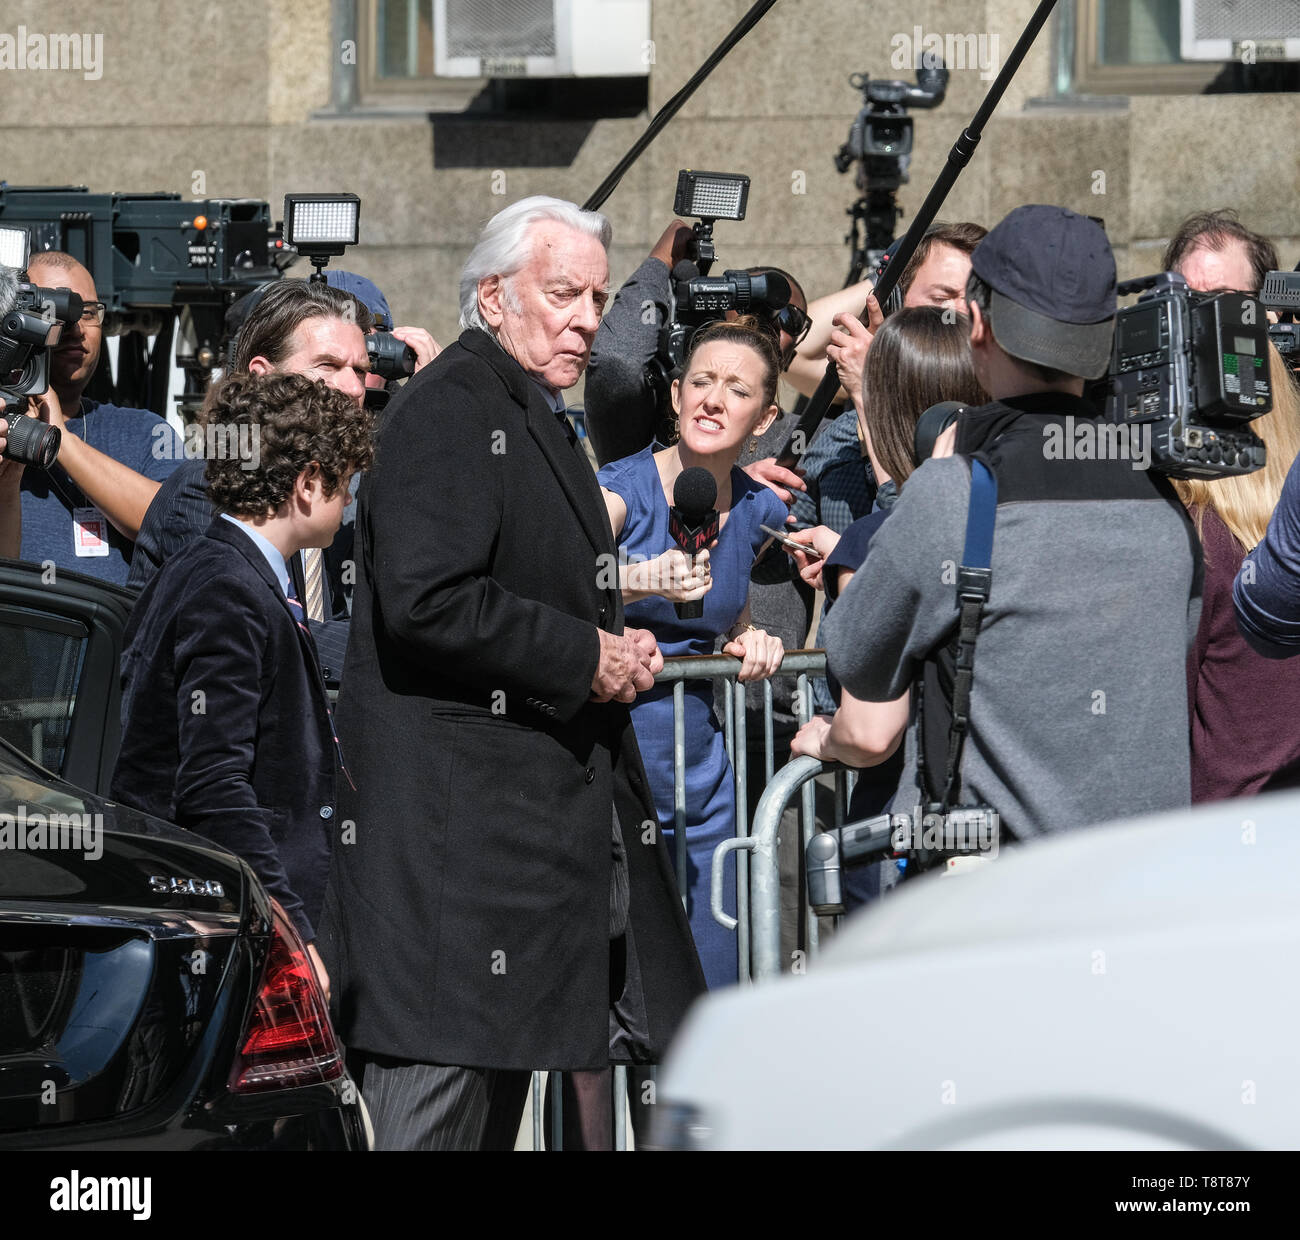 Nicole Kidman, Hugh Grant, Donald Sutherland: HBO filming in Ulster